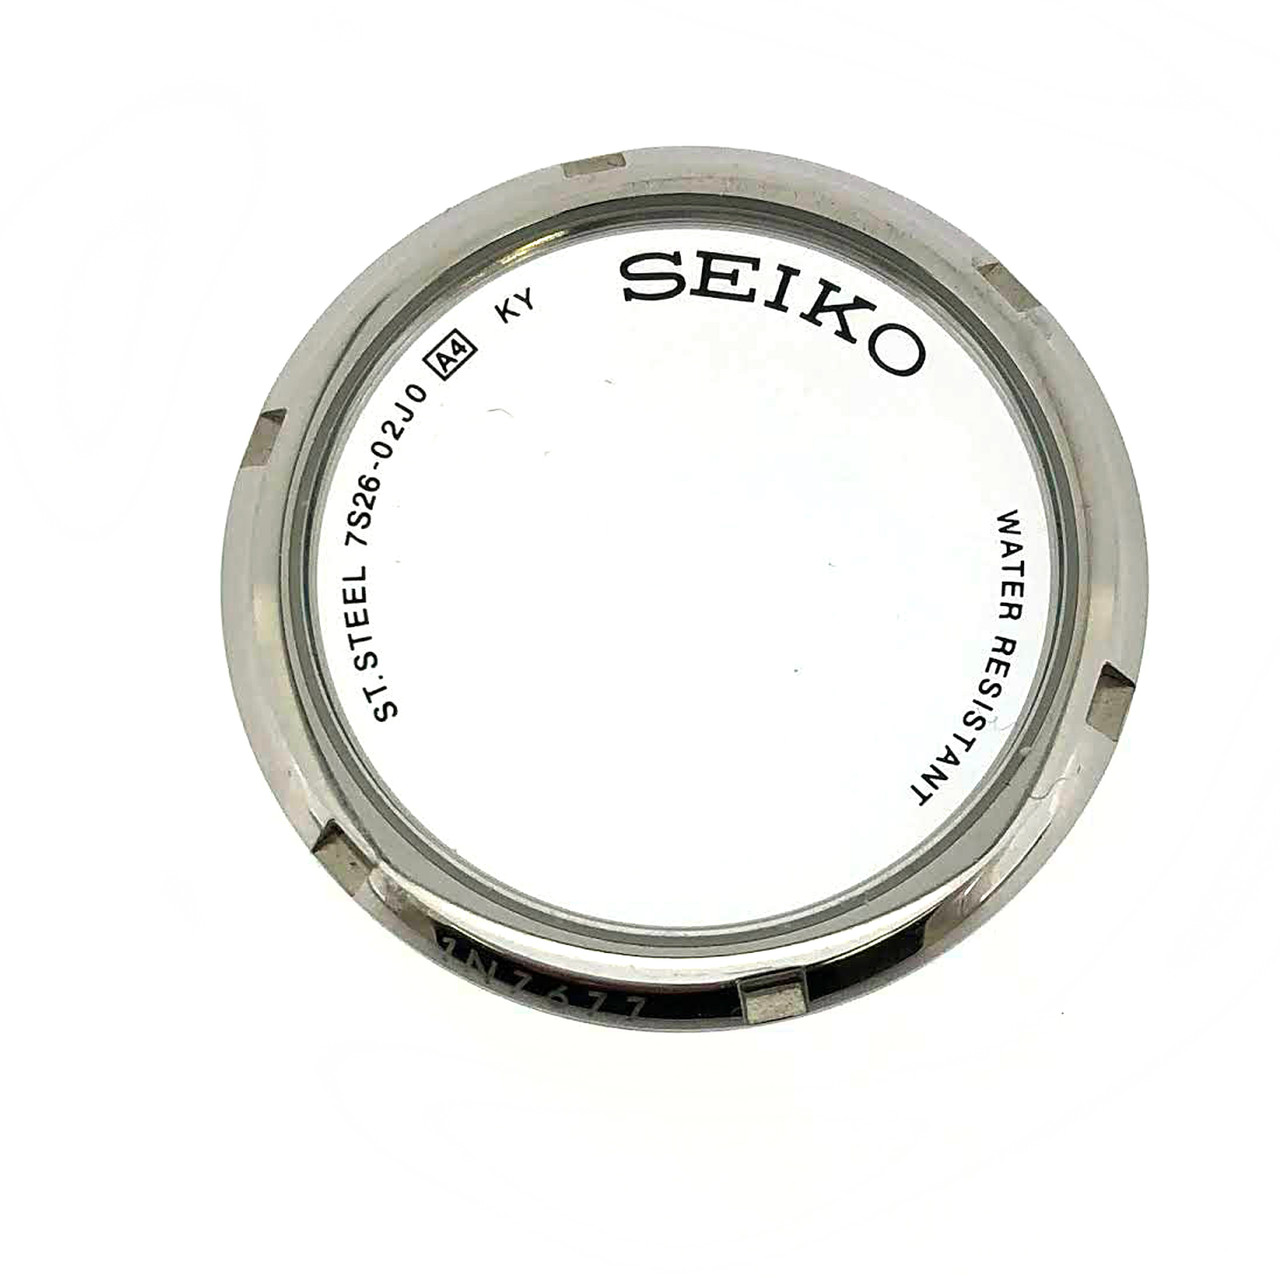 Uhren & Schmuck Seiko case back wrap vinyl film SNK809 SNK807 SNK805 SNK803  5pcs LA2135472